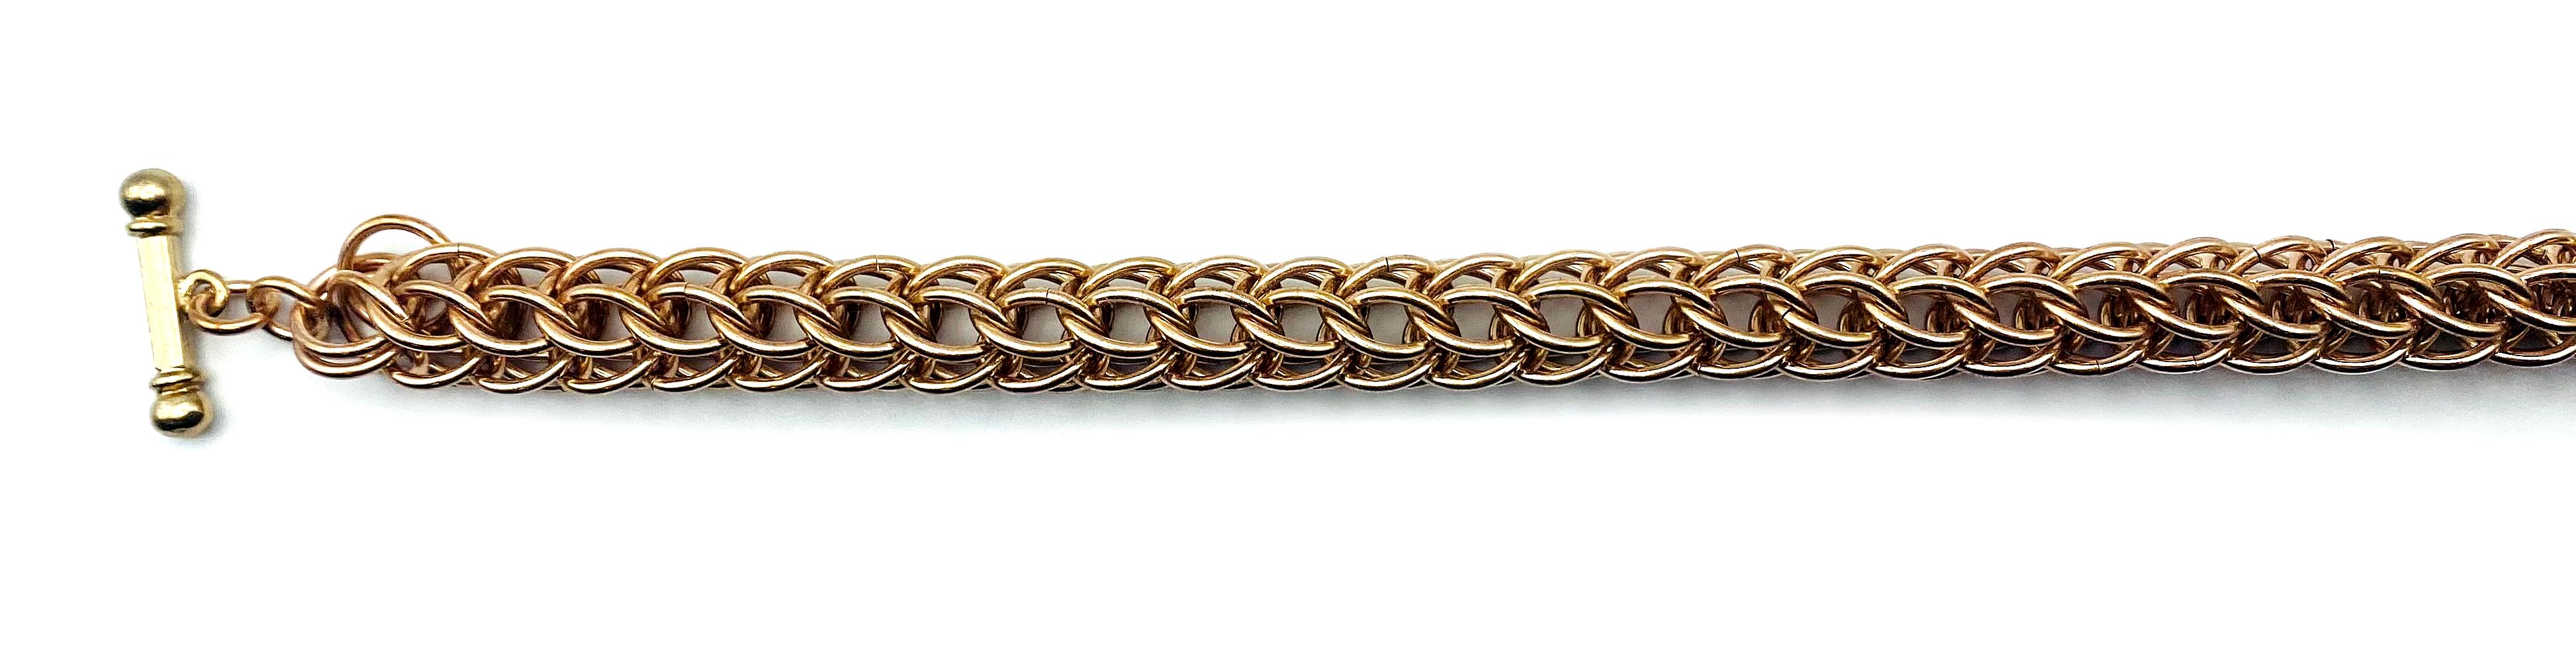 bronze jewelry chain